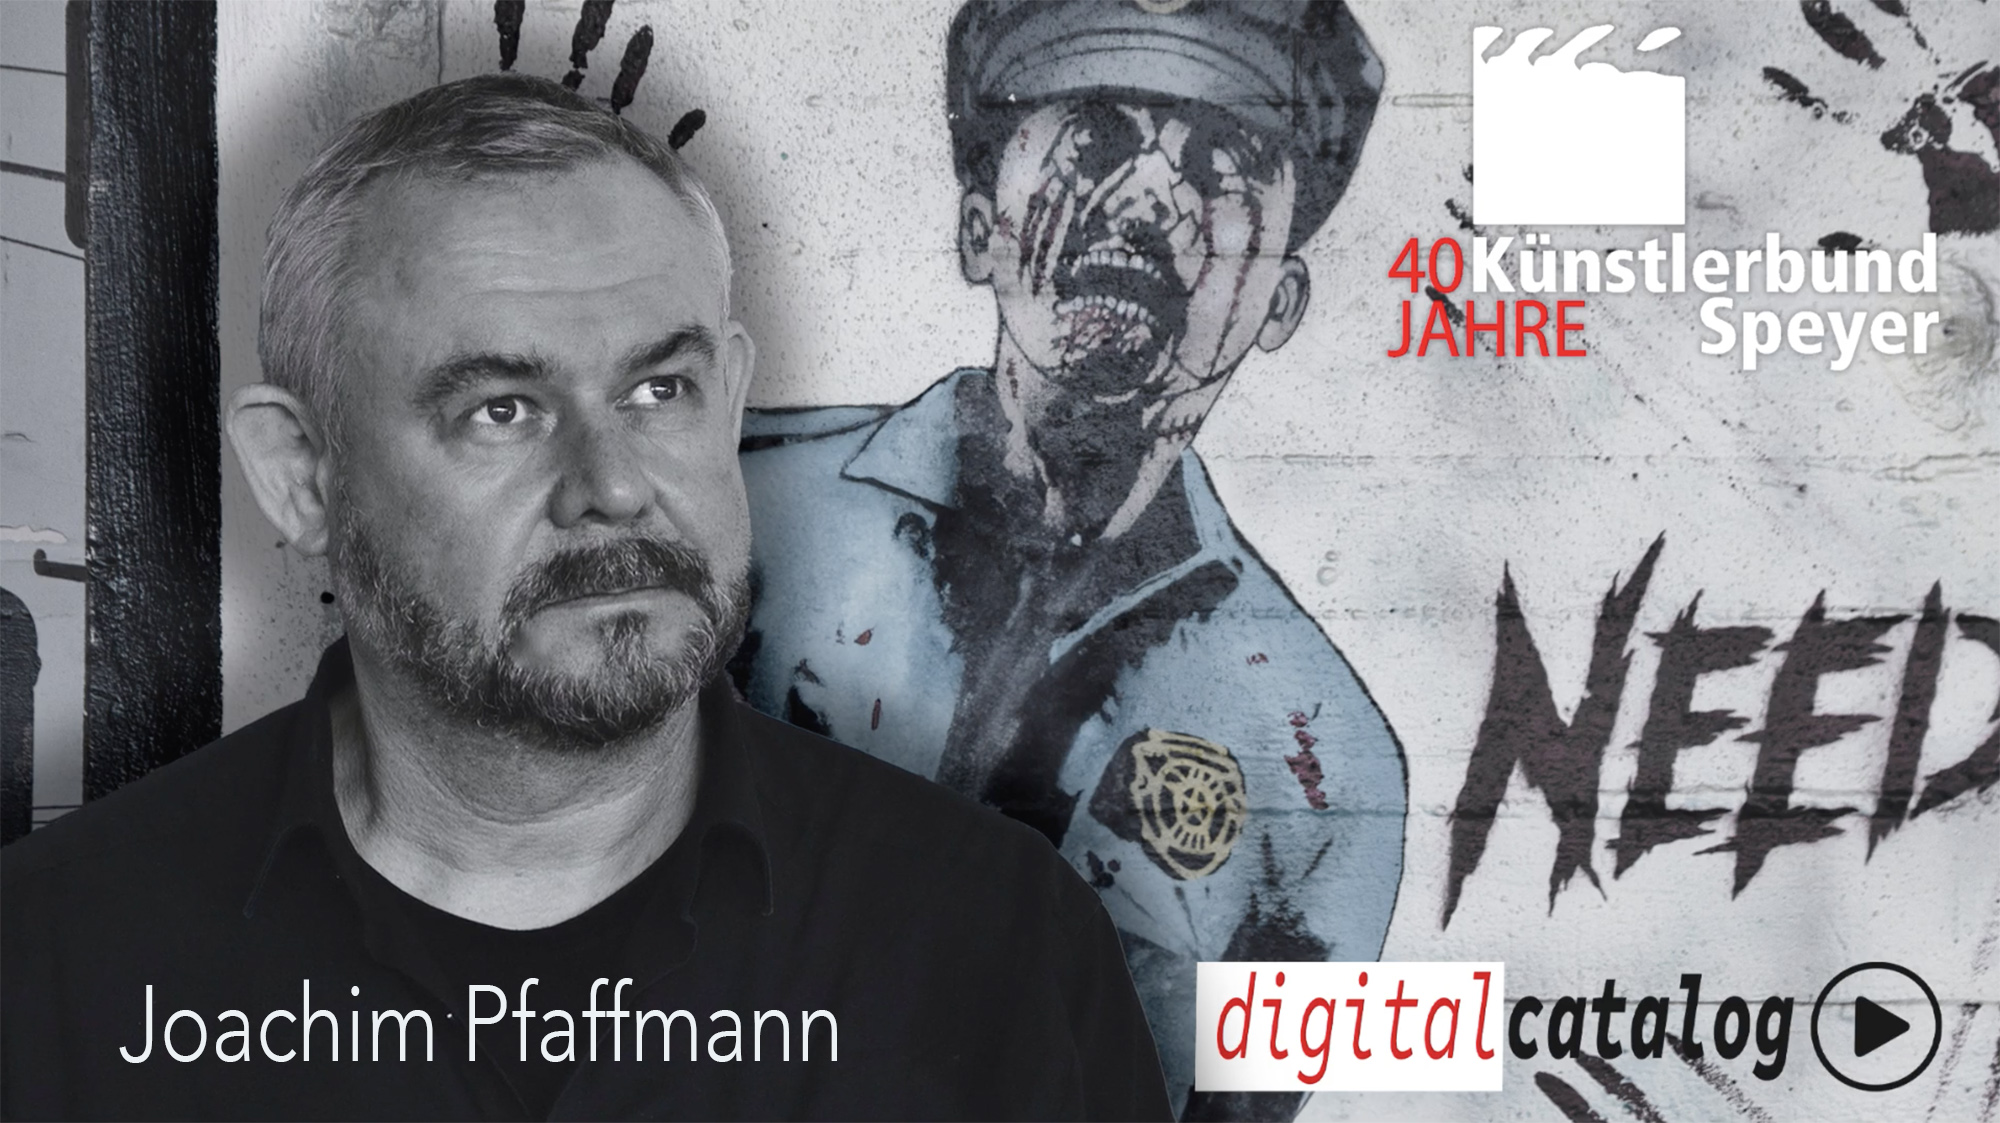 Joachim Pfaffmann | What do you want from life?